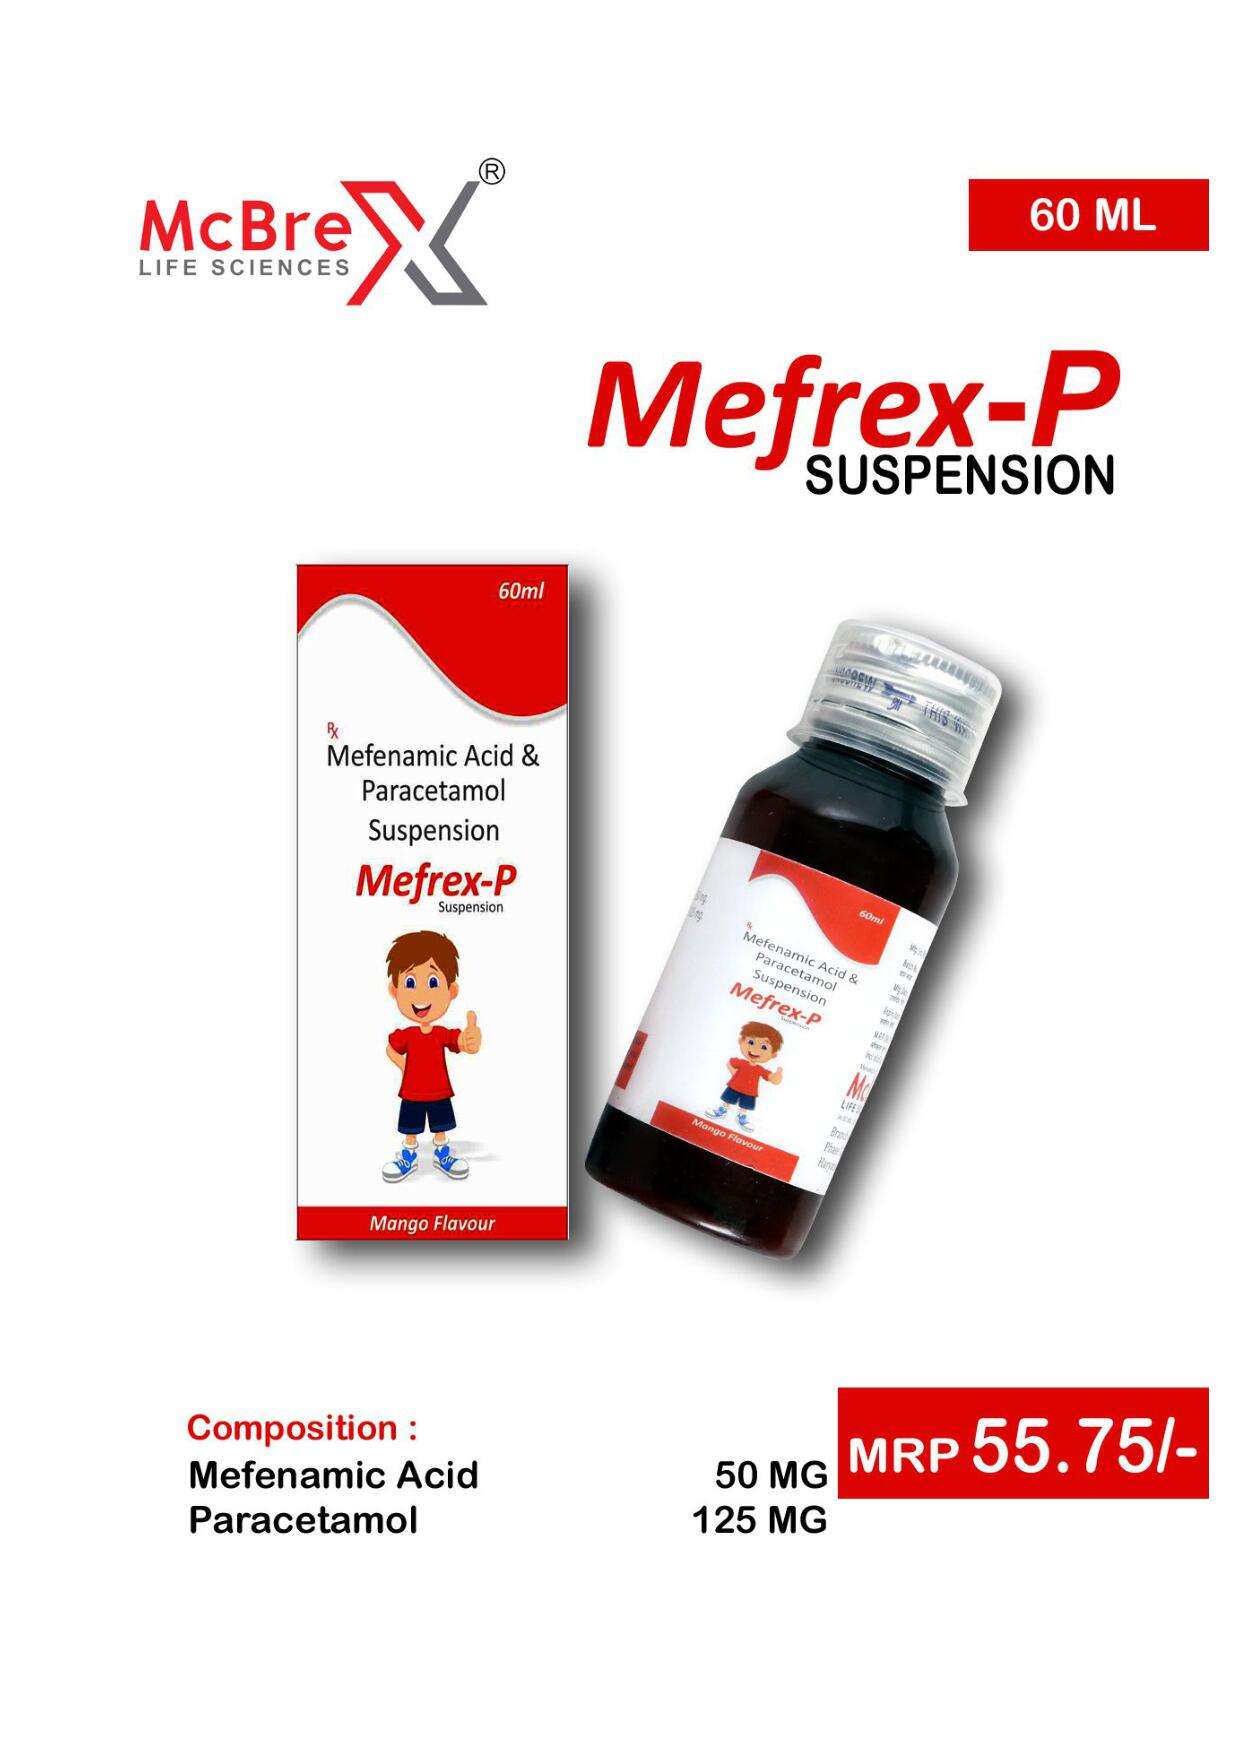 mefenamic acid 50mg. + paracetamol 125mg